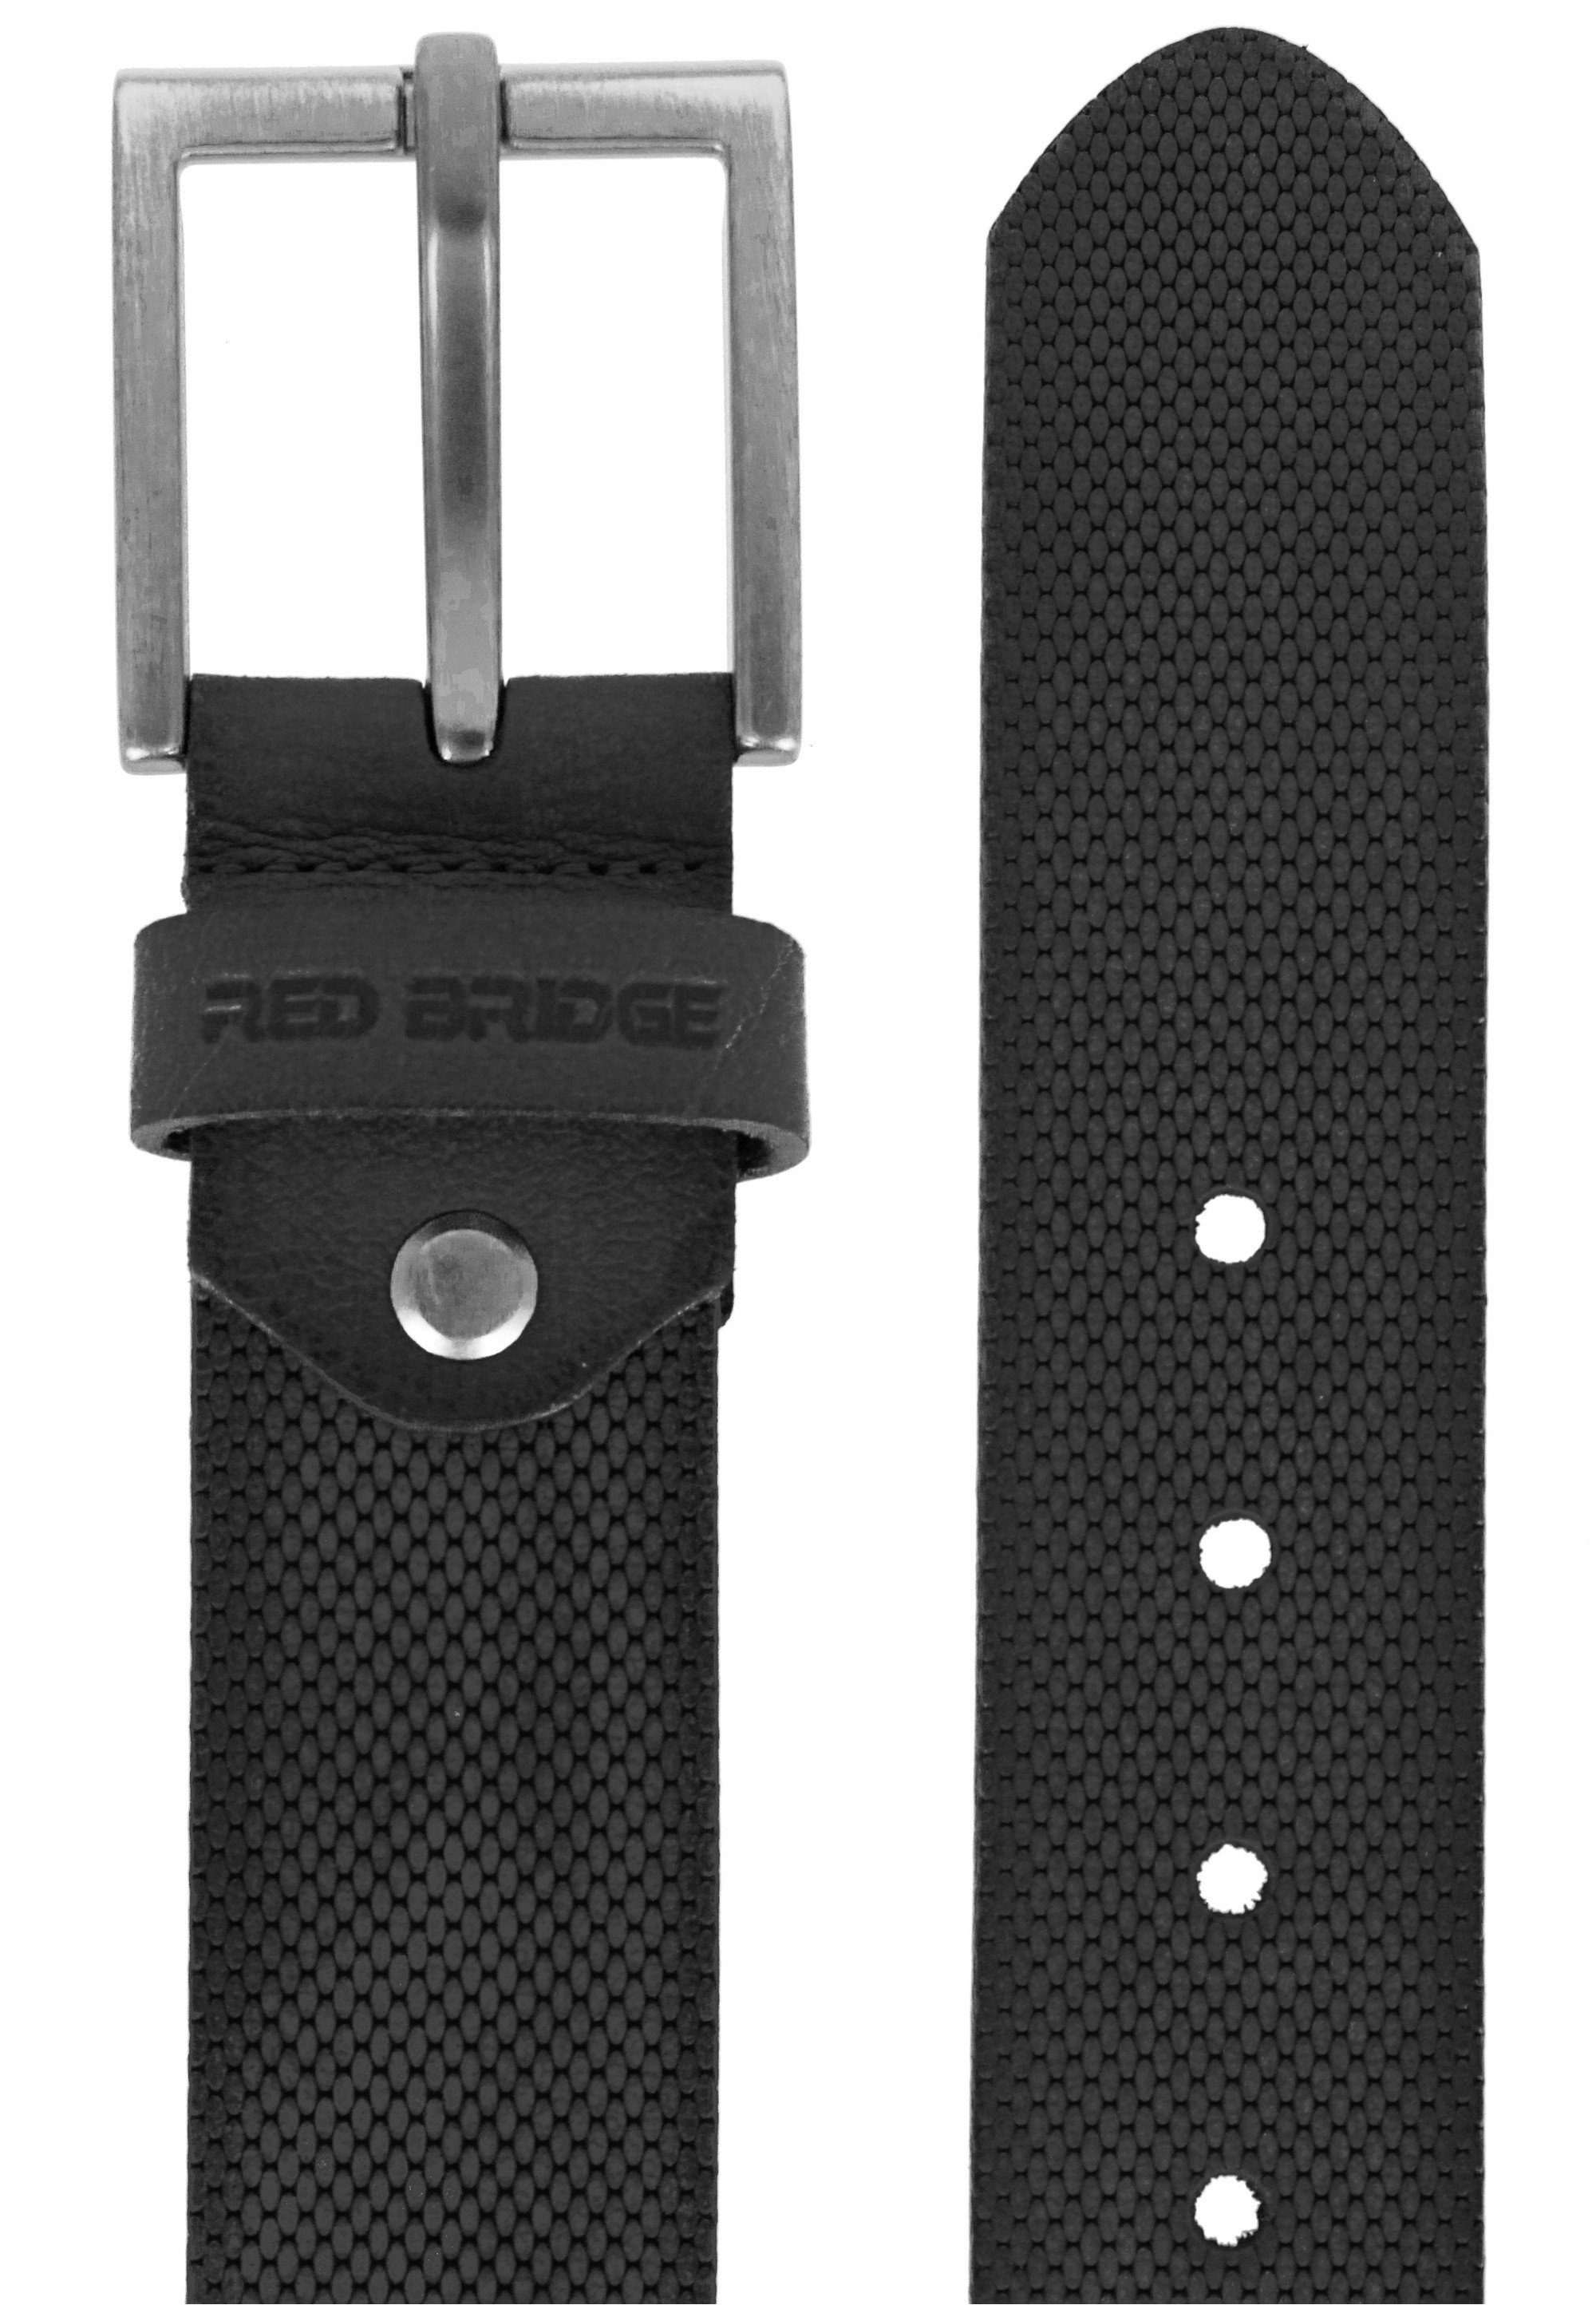 RedBridge Ledergürtel Frisco in schwarz schlichtem Design